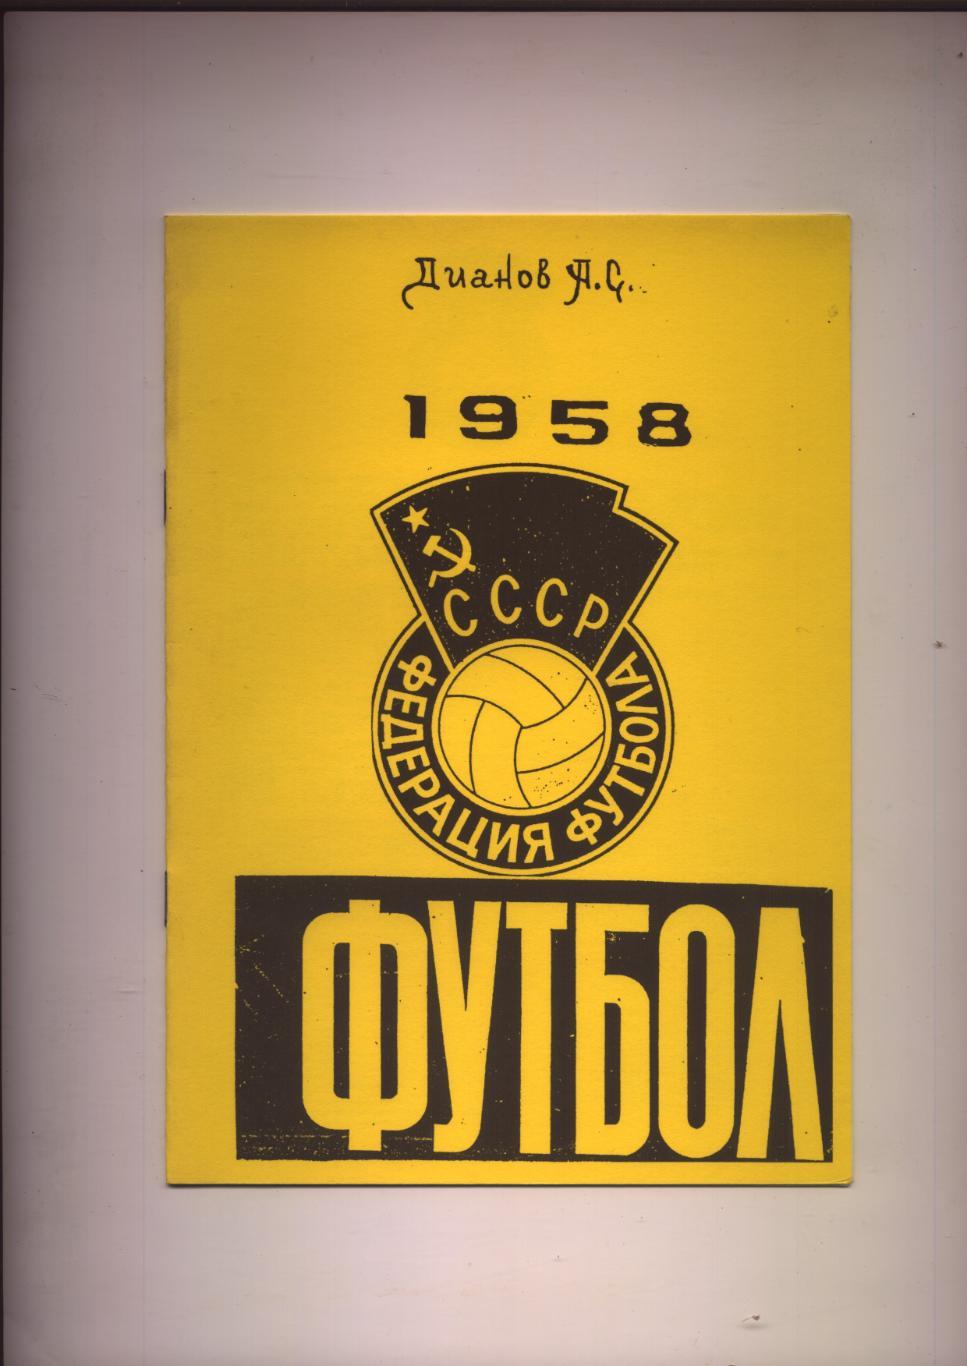 Дианов А. С. Футбол 1958 Класс Б Южная 4-я зона статистика